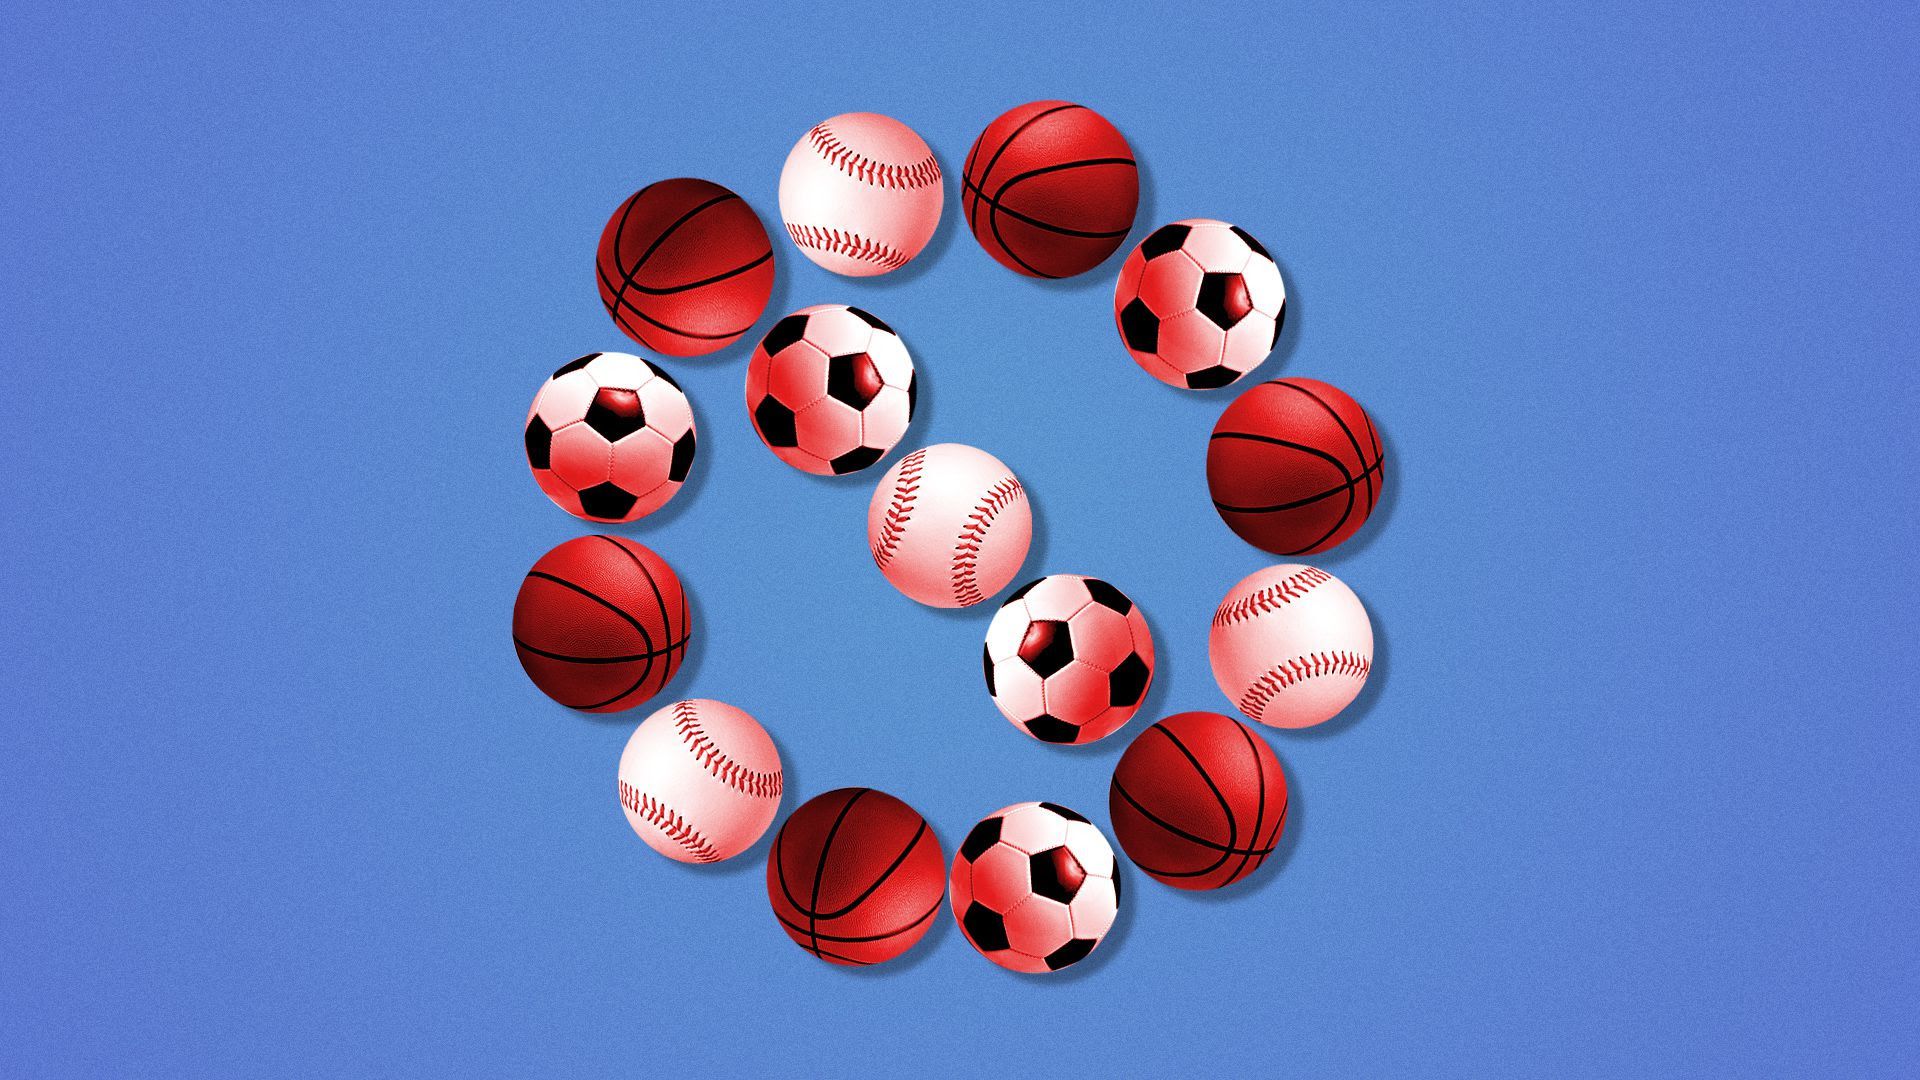 Sports balls assembled to form a cross.